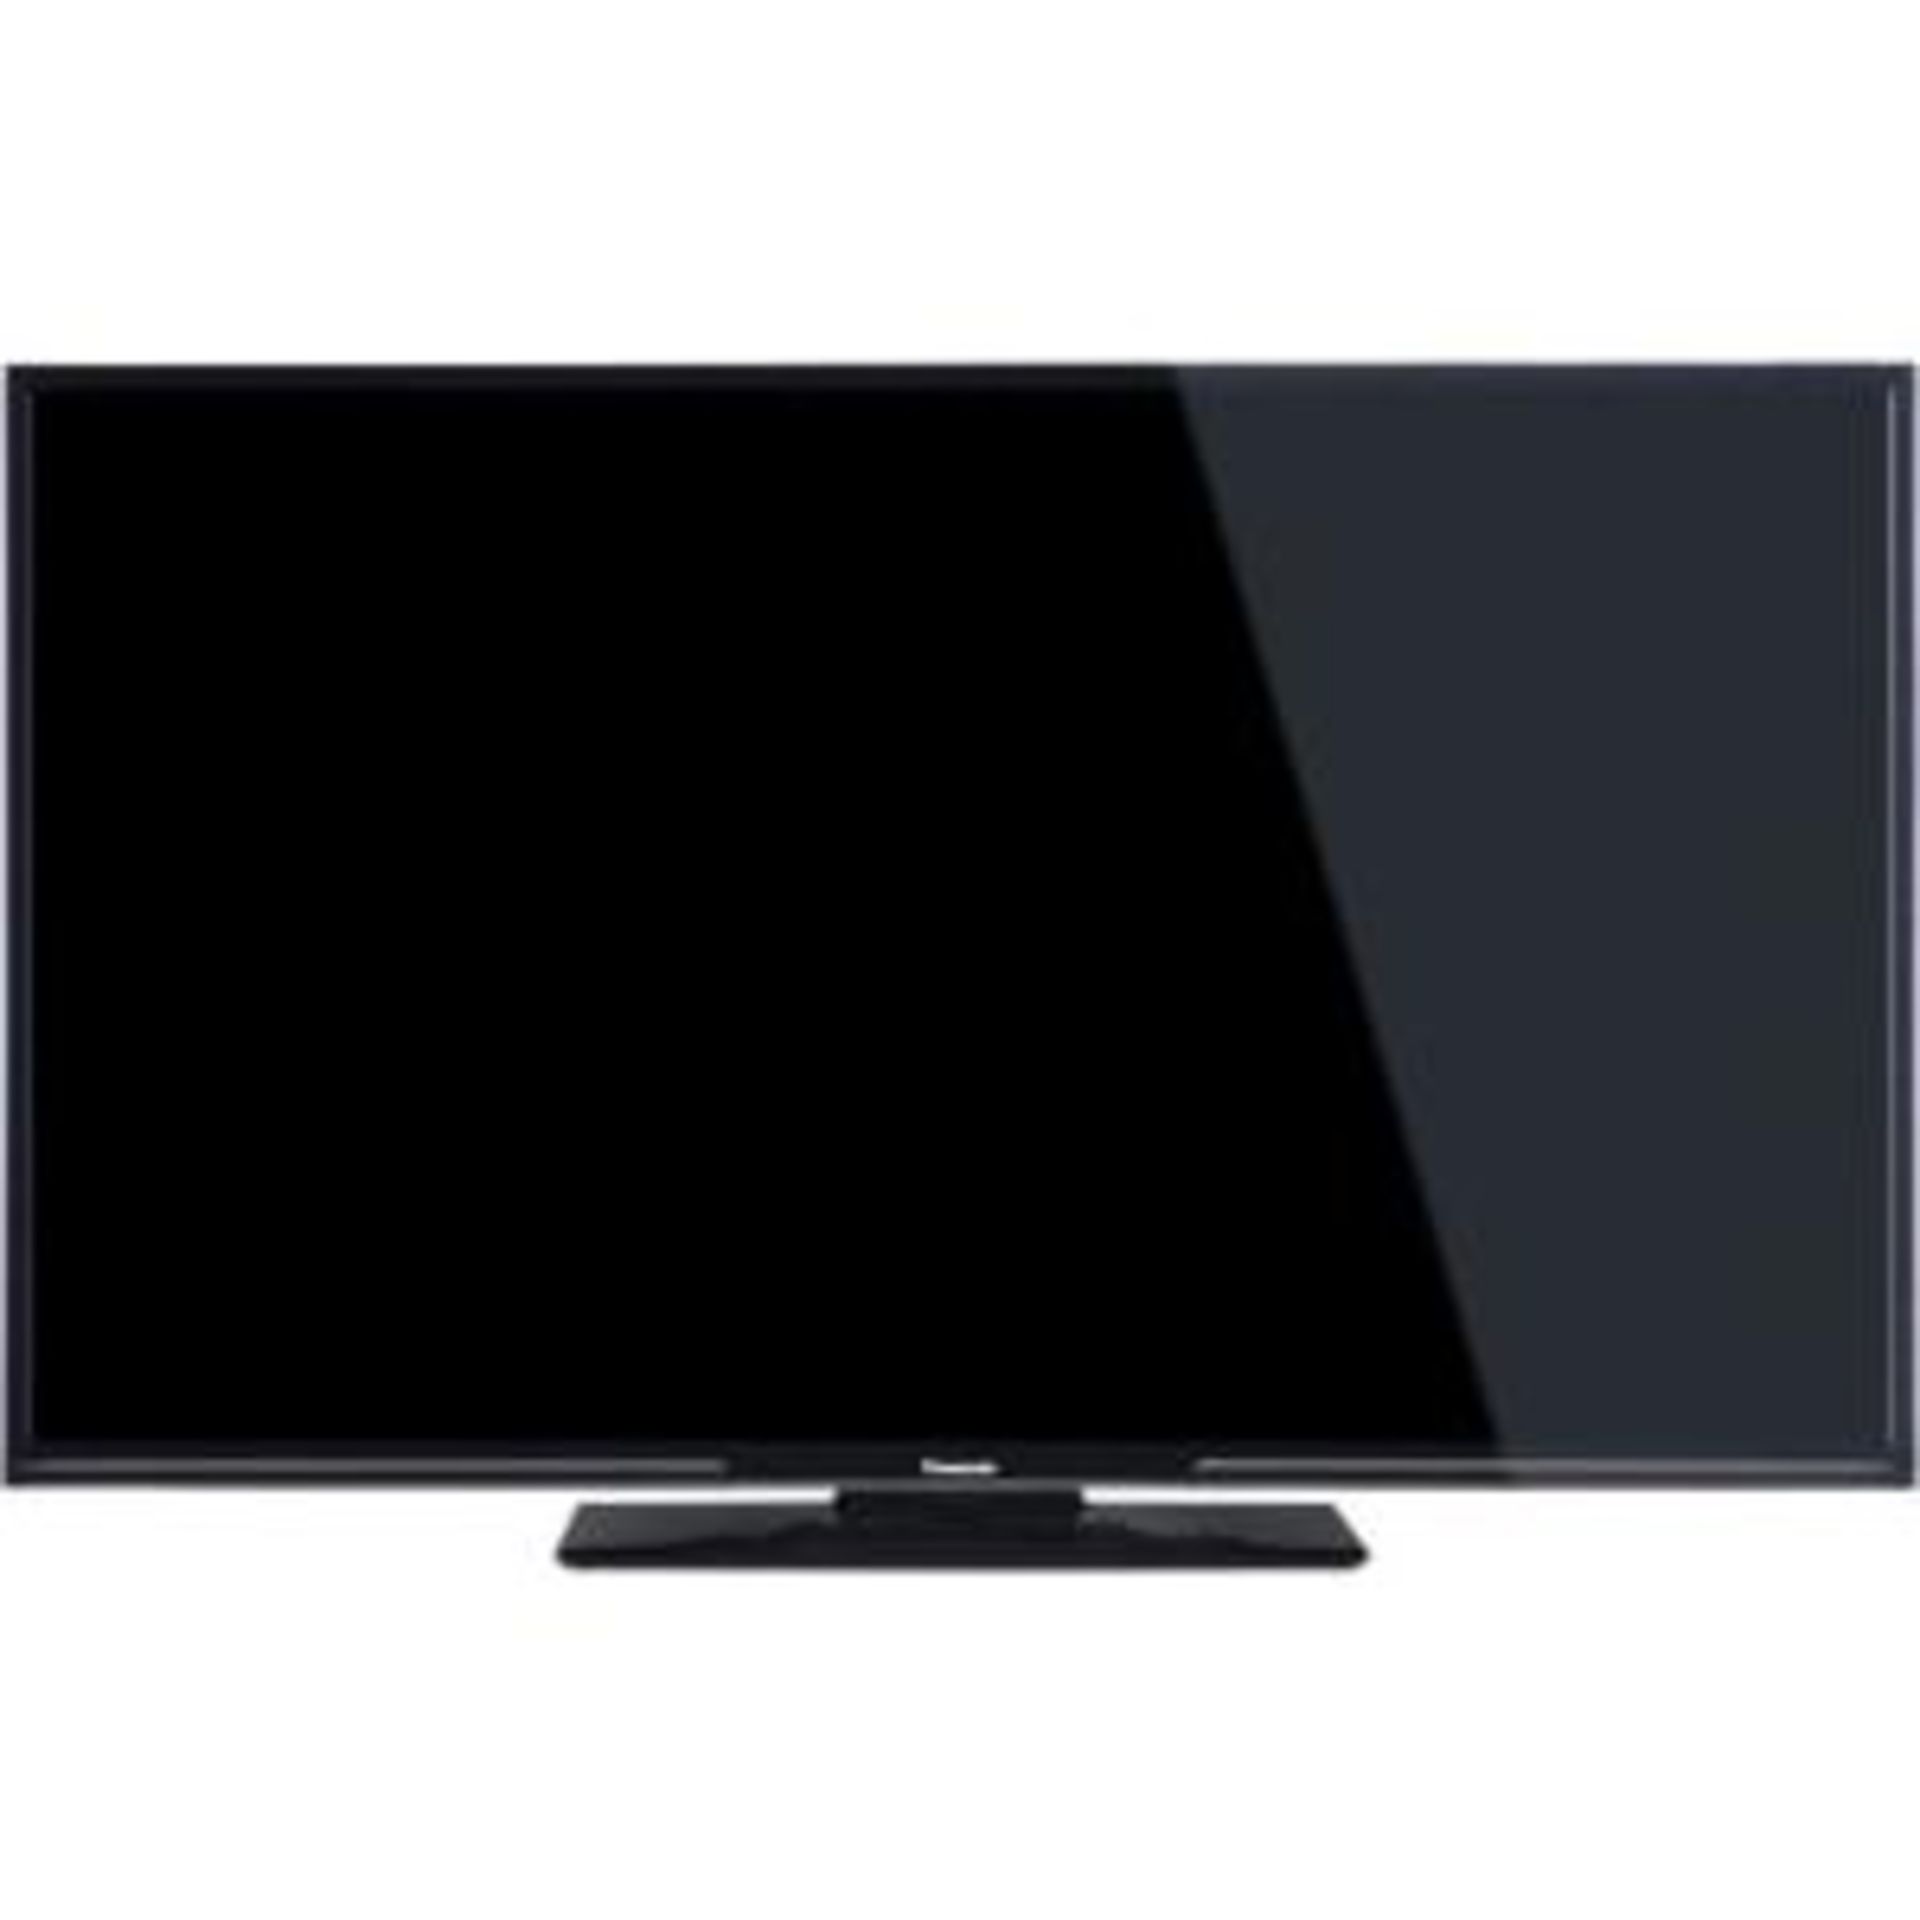 (T36) PANASONIC VIERA TX-55DX650B Smart 4k Ultra HD 55" LED TV. RRP £799. Experience beautiful 4k - Bild 2 aus 2